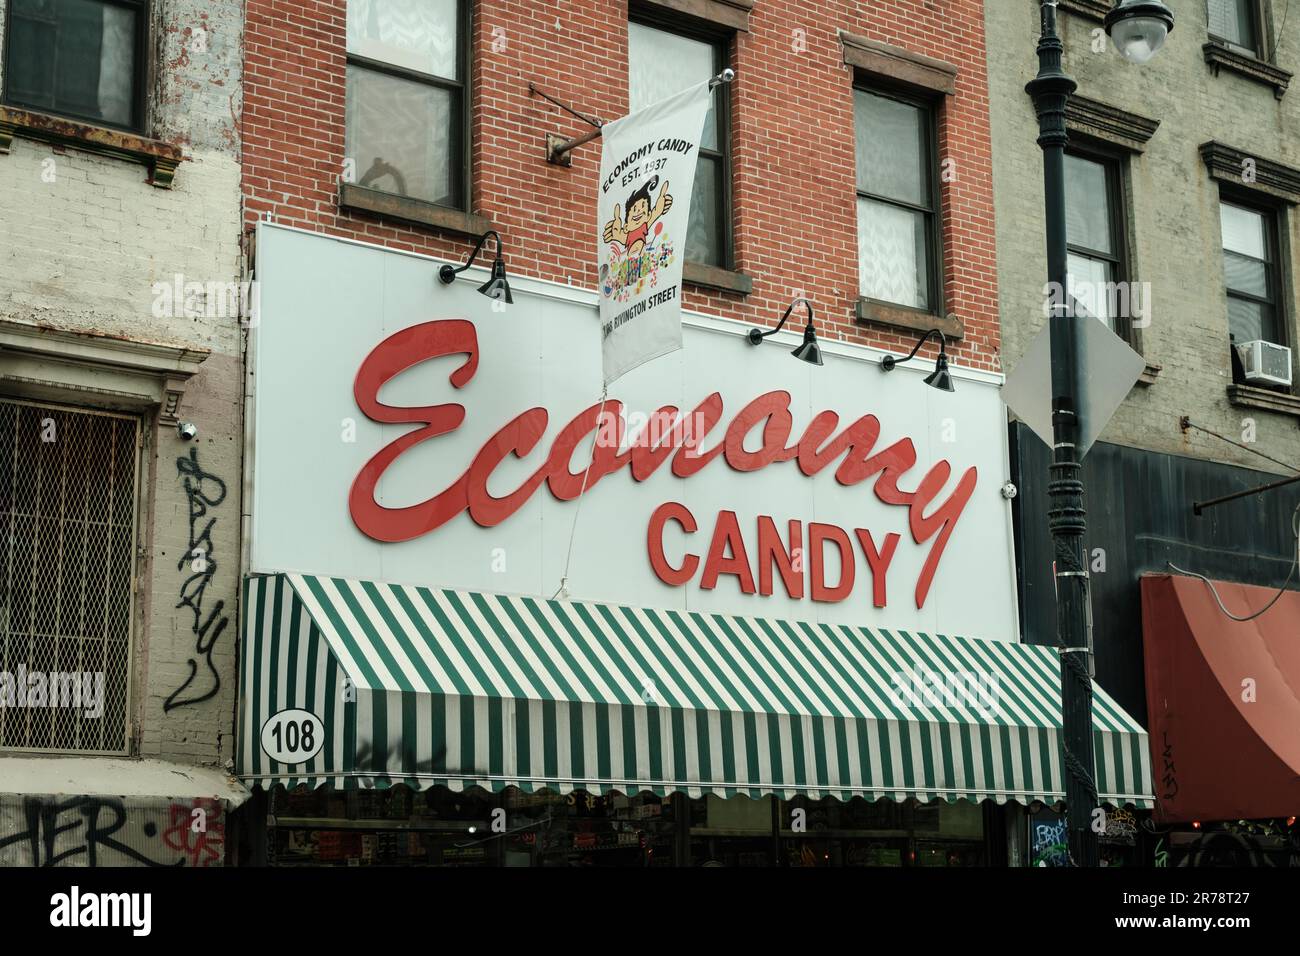 NESTLE - Economy Candy